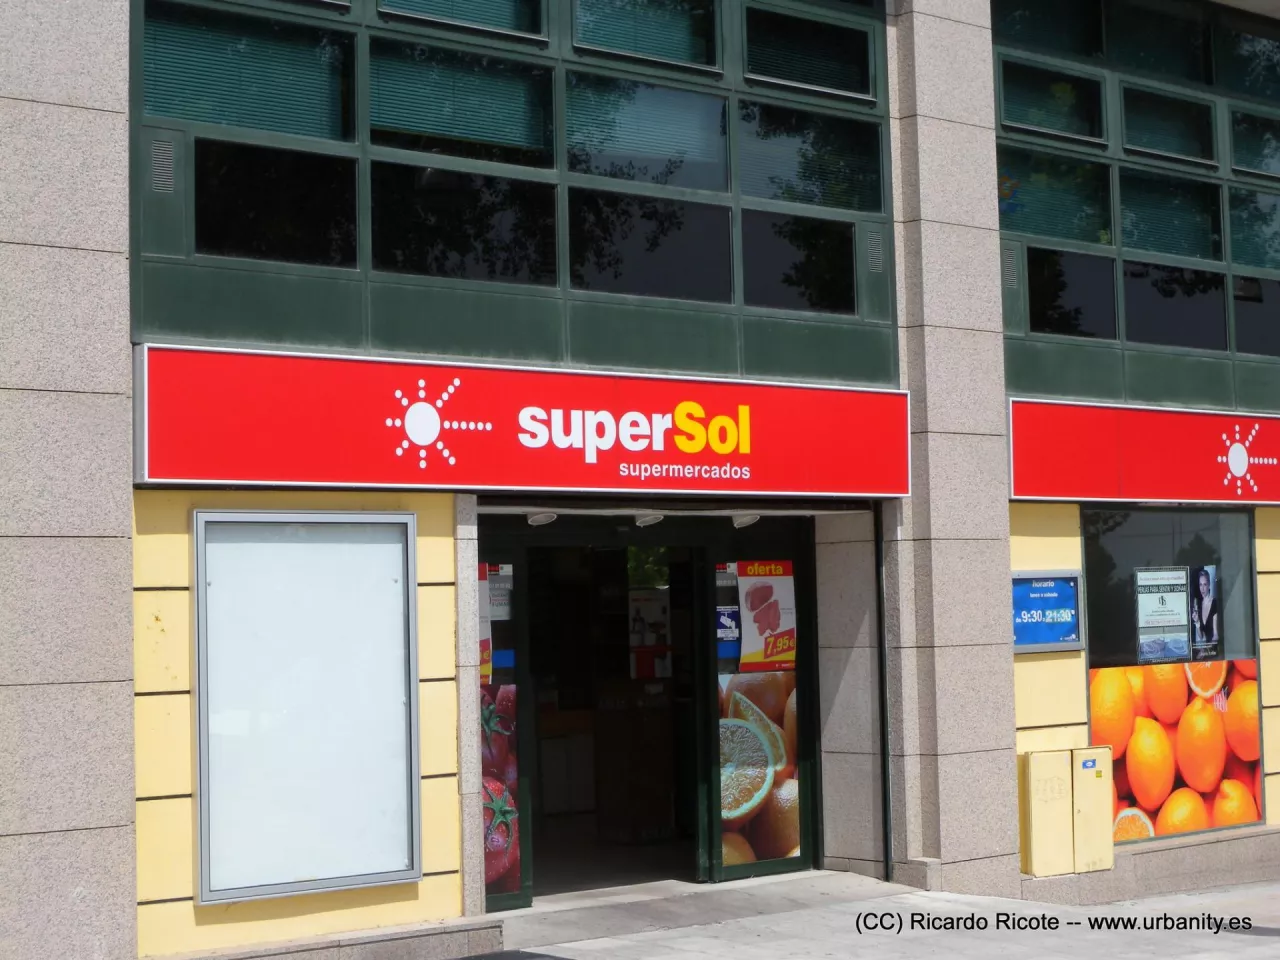 Sklepy Supersol trafiły pod skrzydła Carrefoura (Flickr.com/Ricardo Ricote Rodríguez)